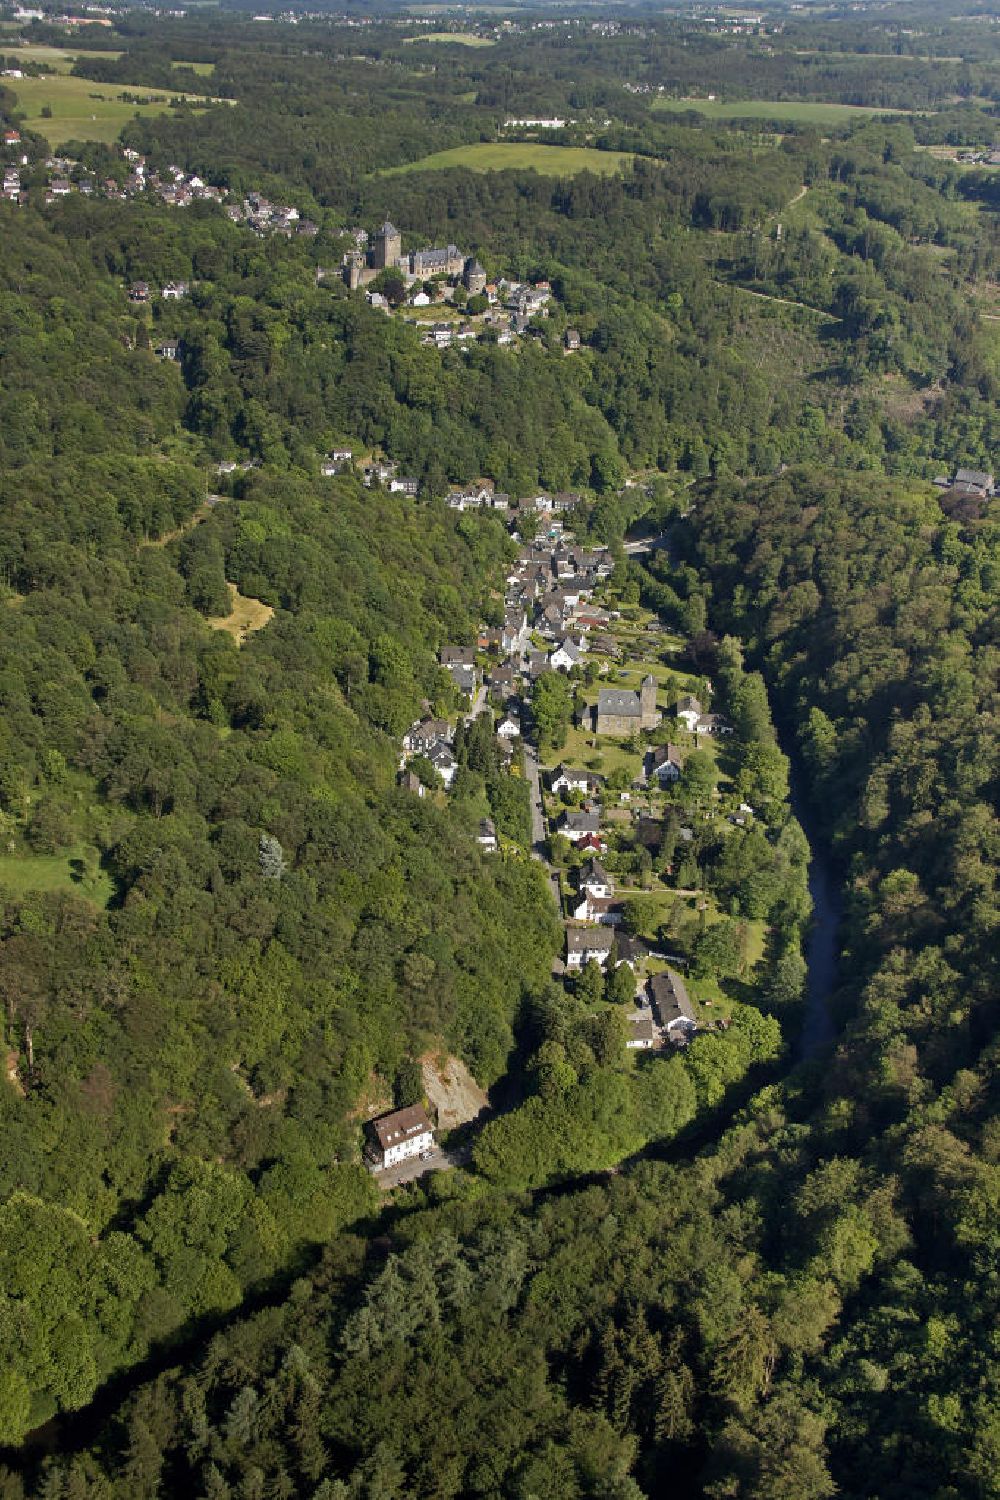 Luftbild Burg / Solingen - Stadtansicht vom Solinger Stadtteil Burg